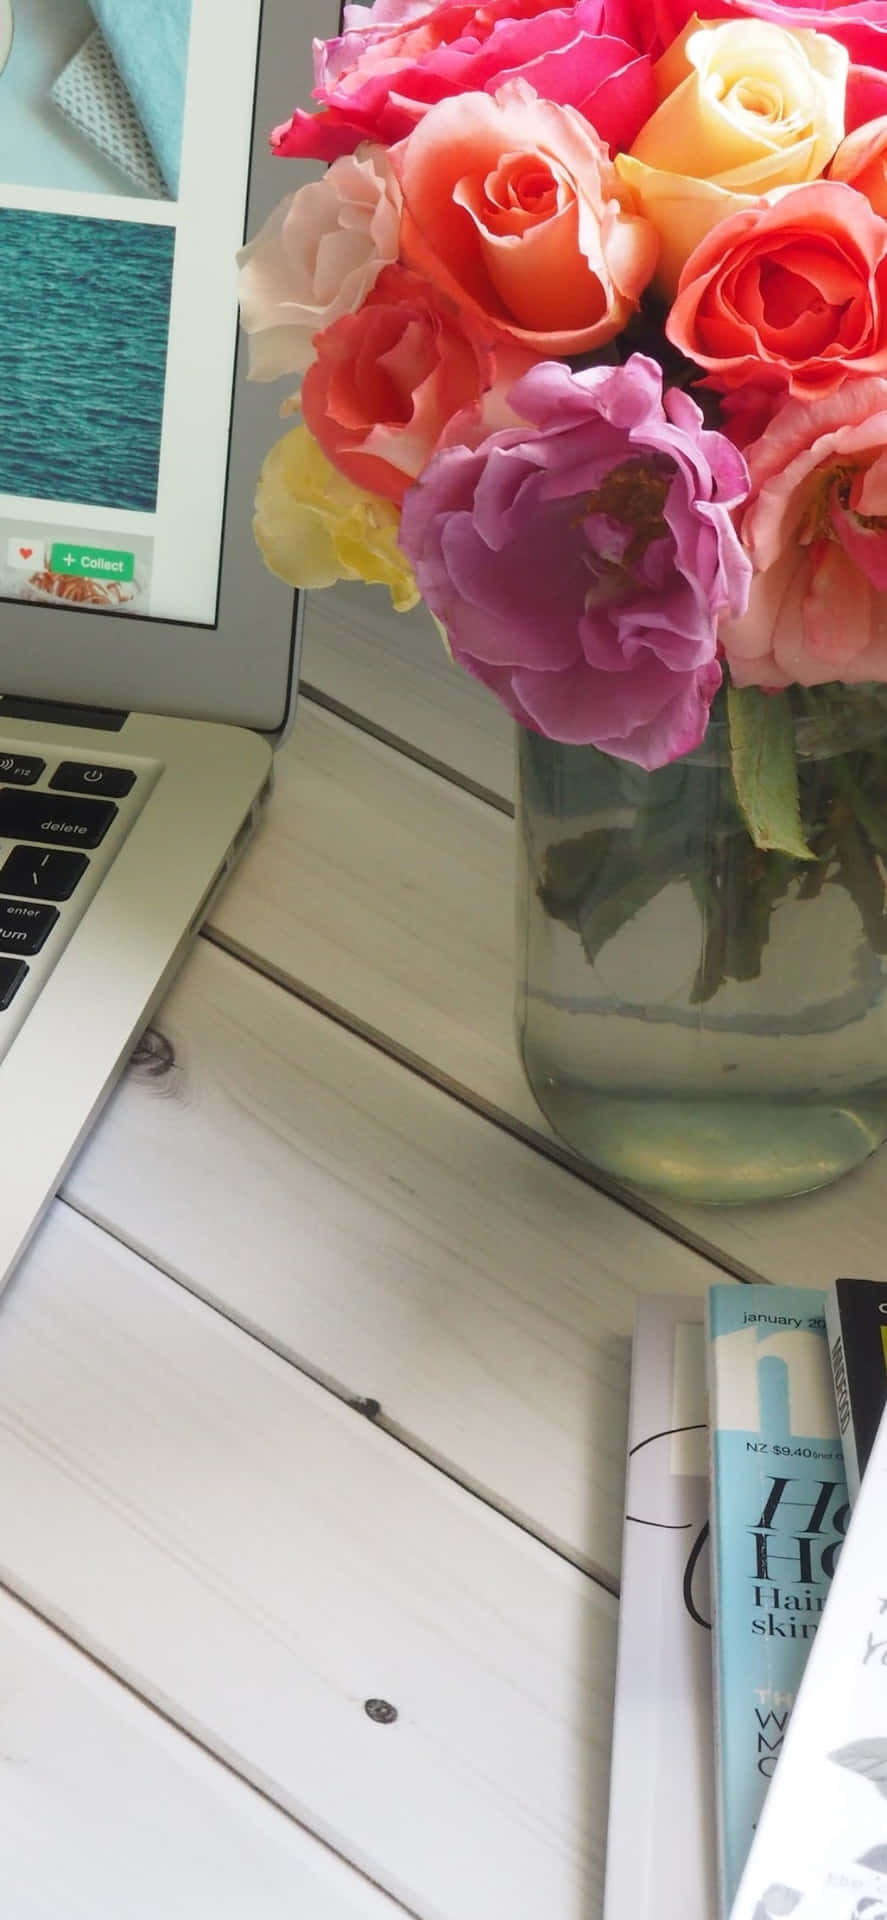 Iphone X Desk Background Laptop Beside A Flower Vase